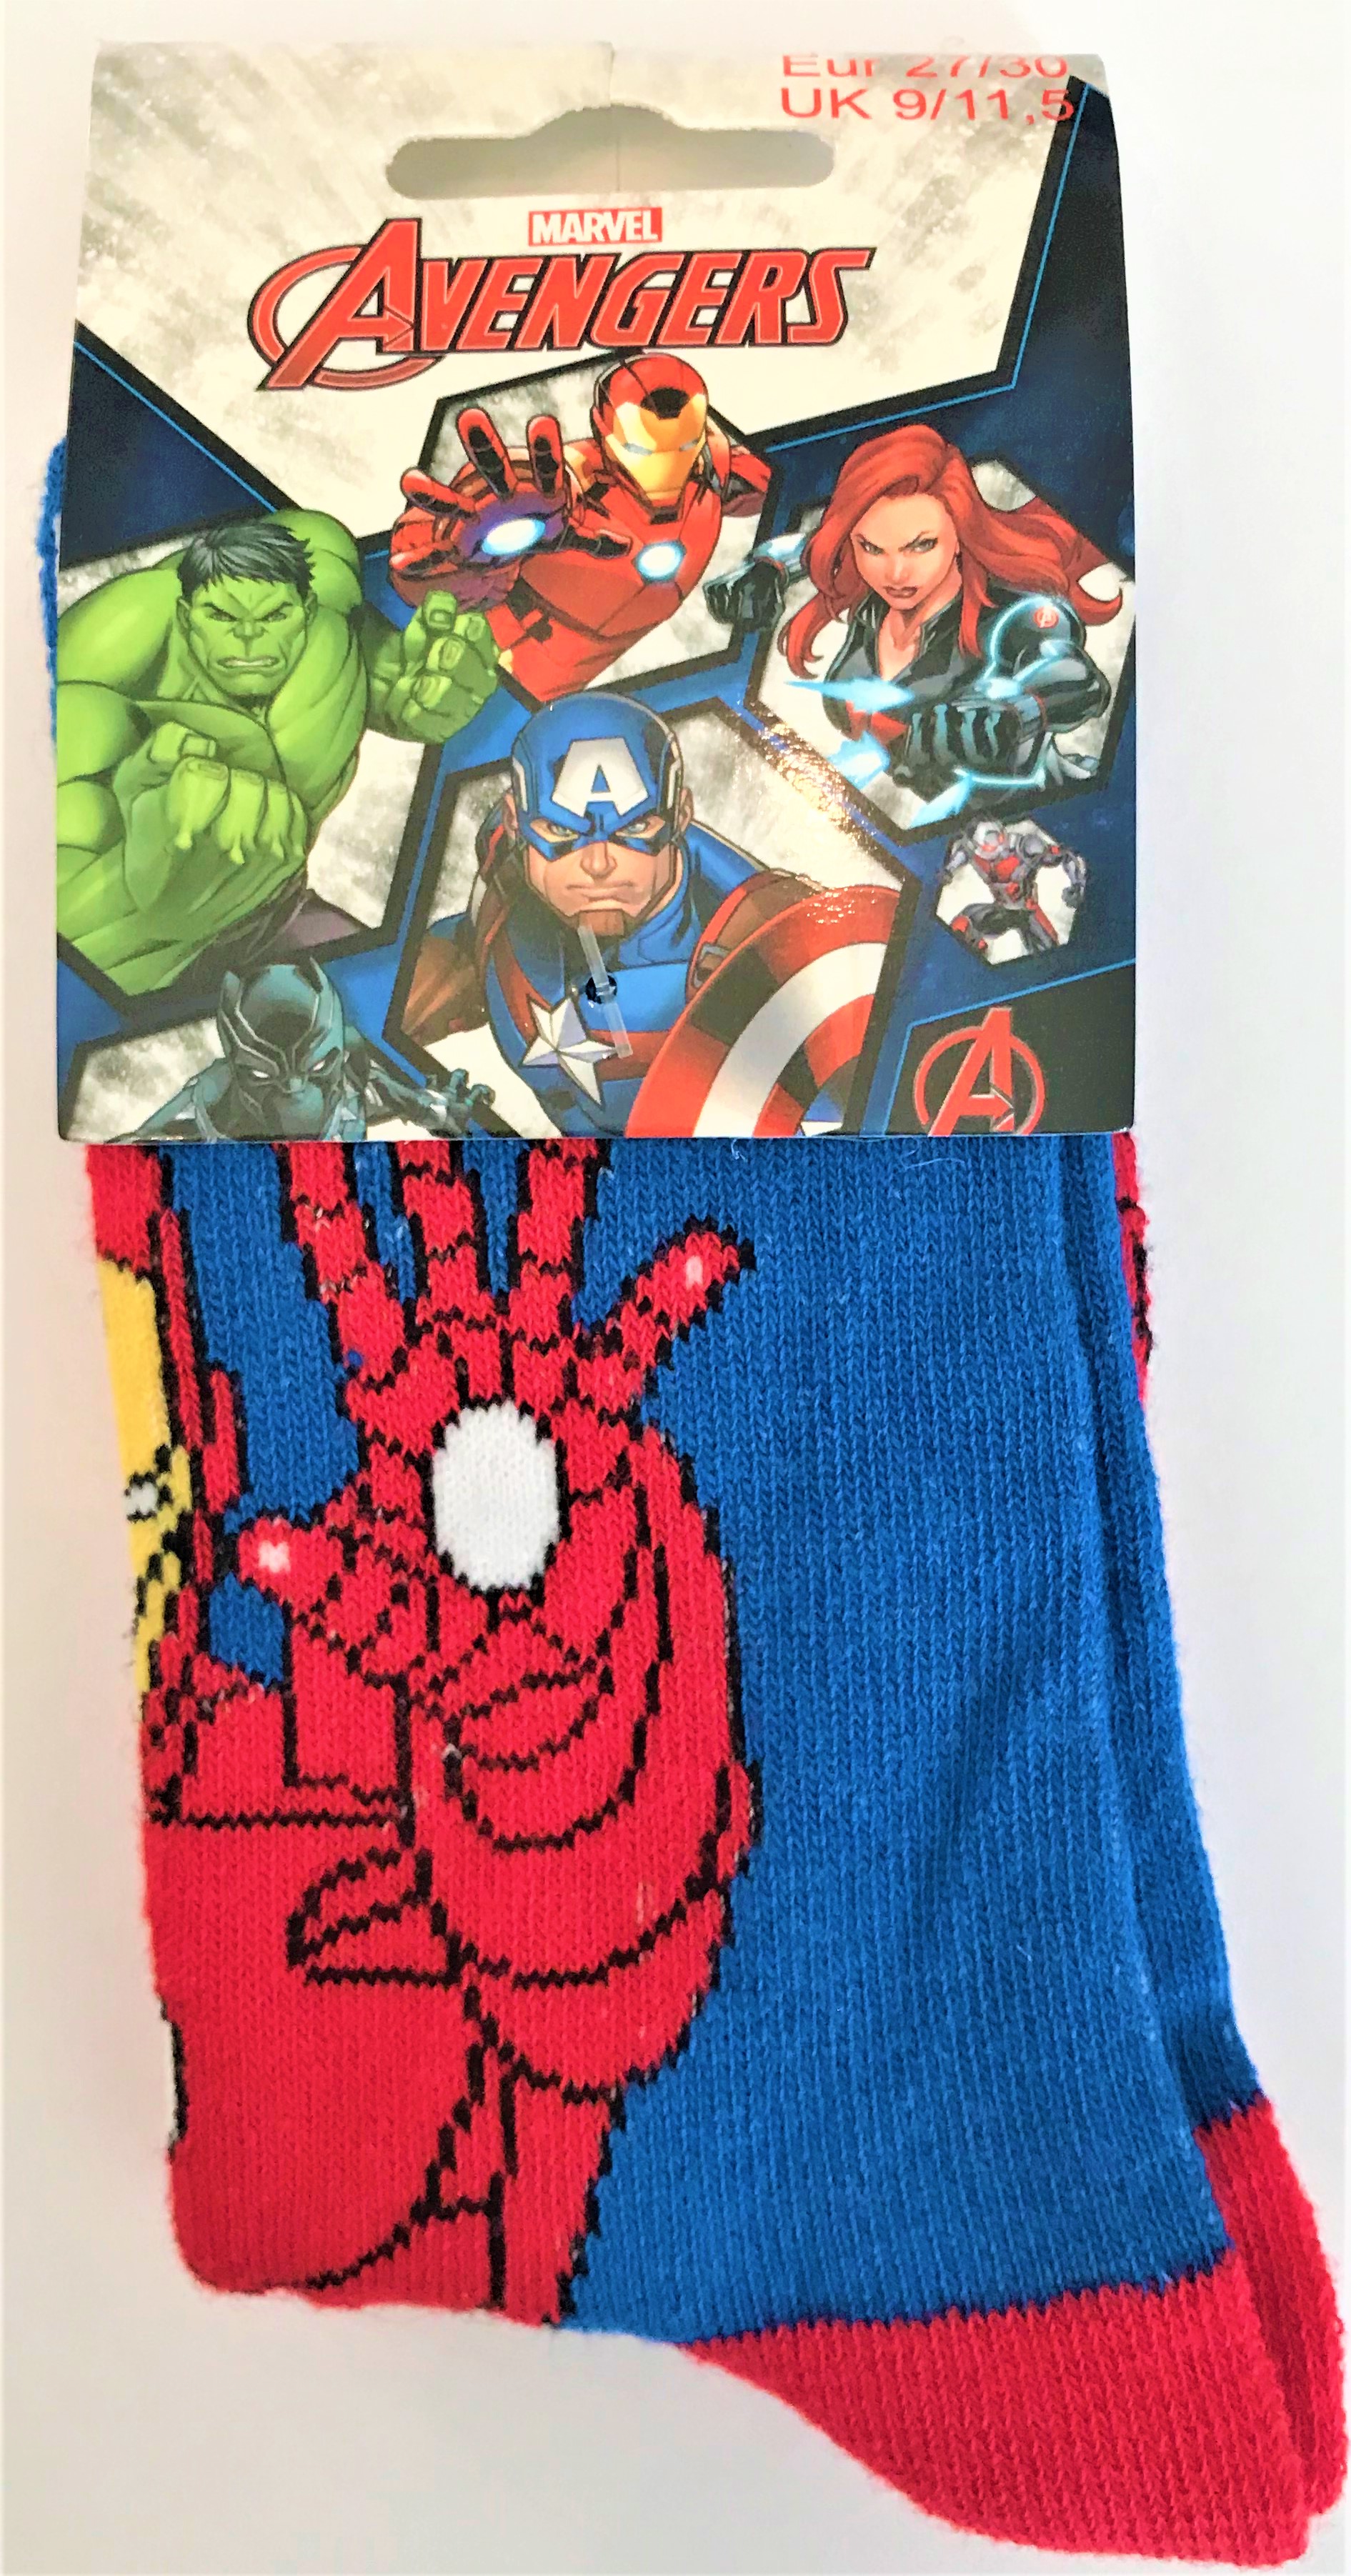 Marvel Avengers Iron Man - blau, Kinder Socken, Strümpfe - Gr. 23/26 - 31/34